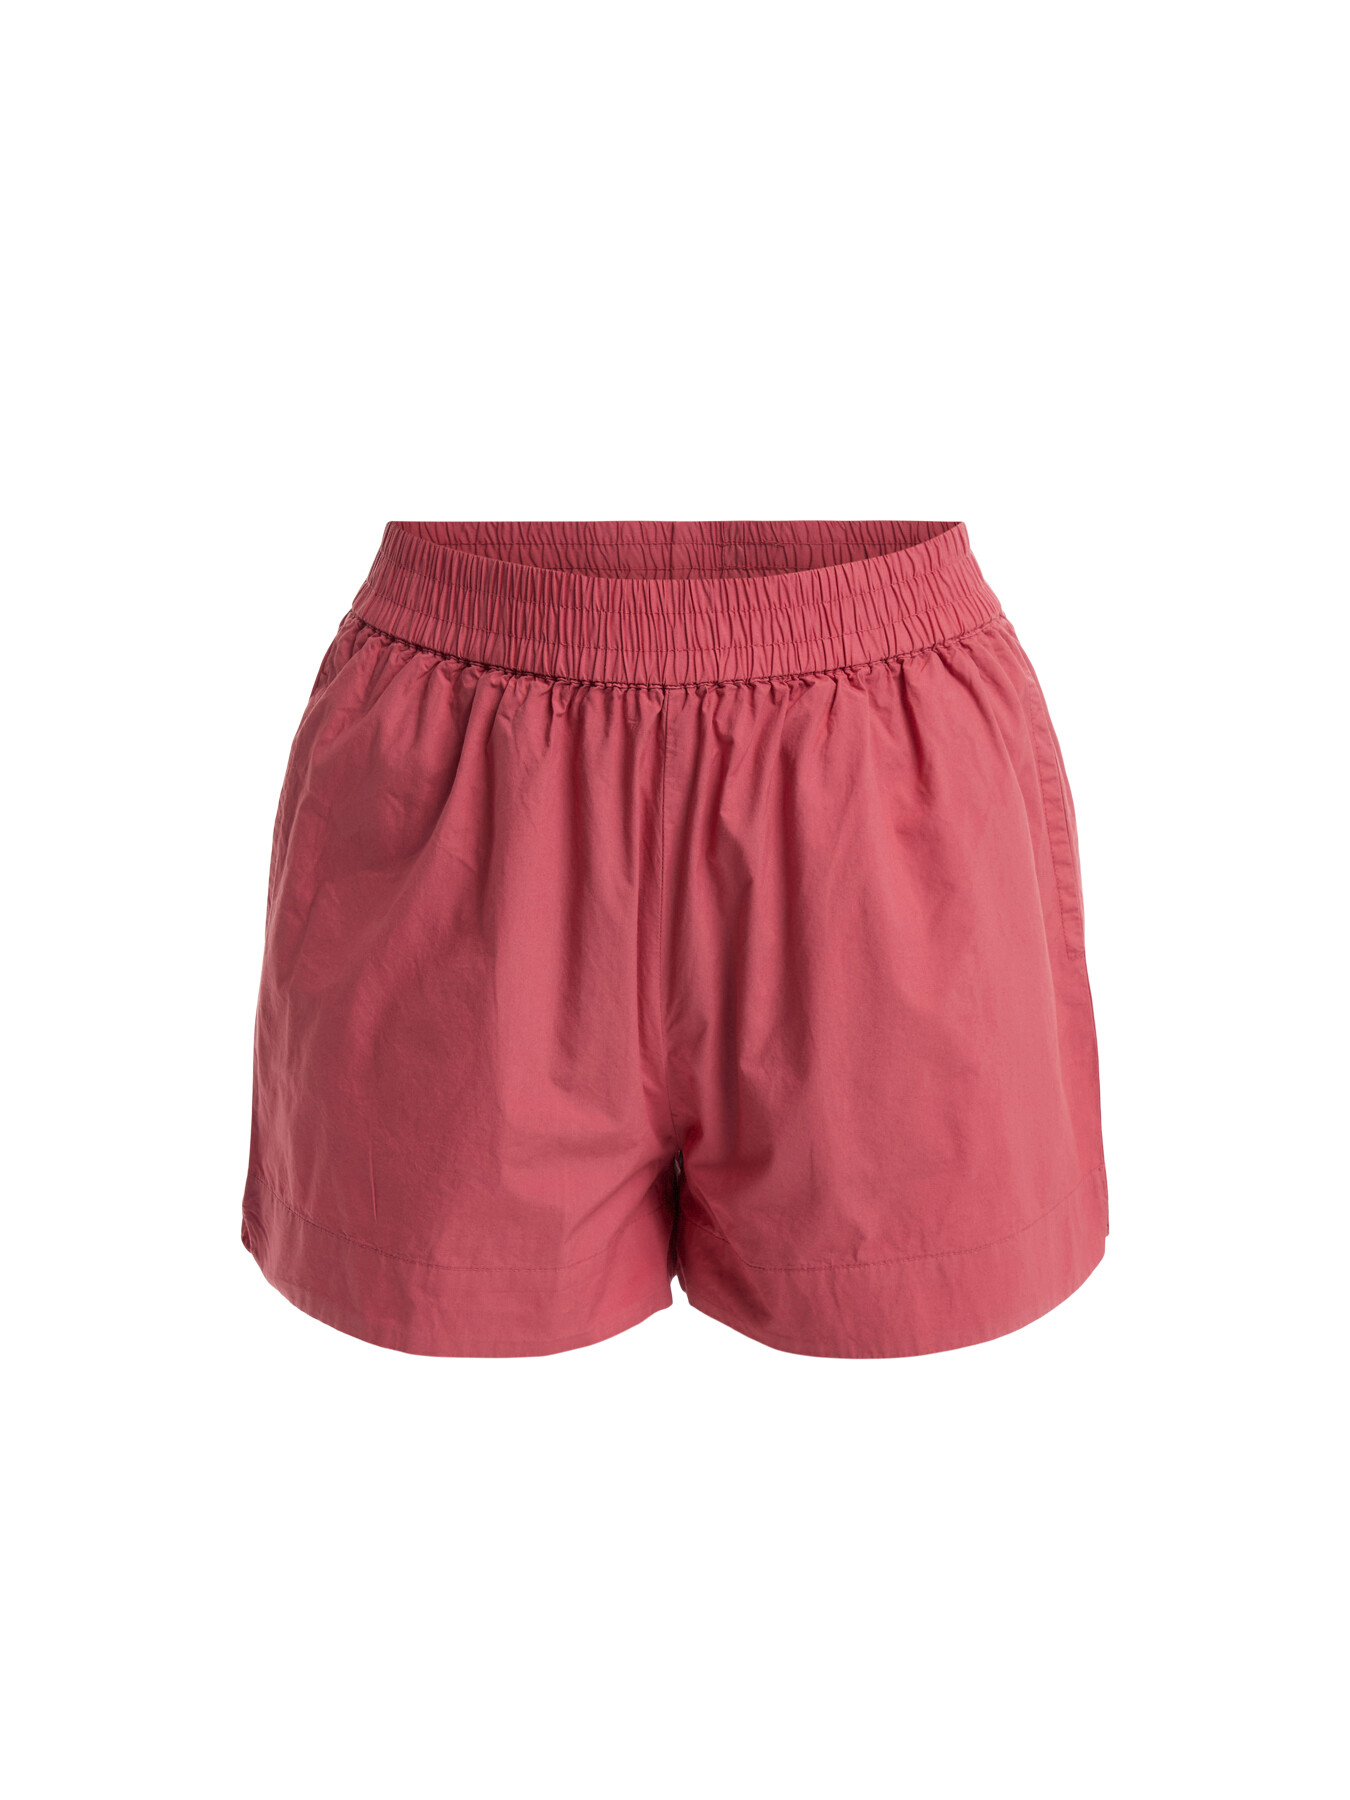 Lmnd Women's The Chiara Shorts Orange In Pink